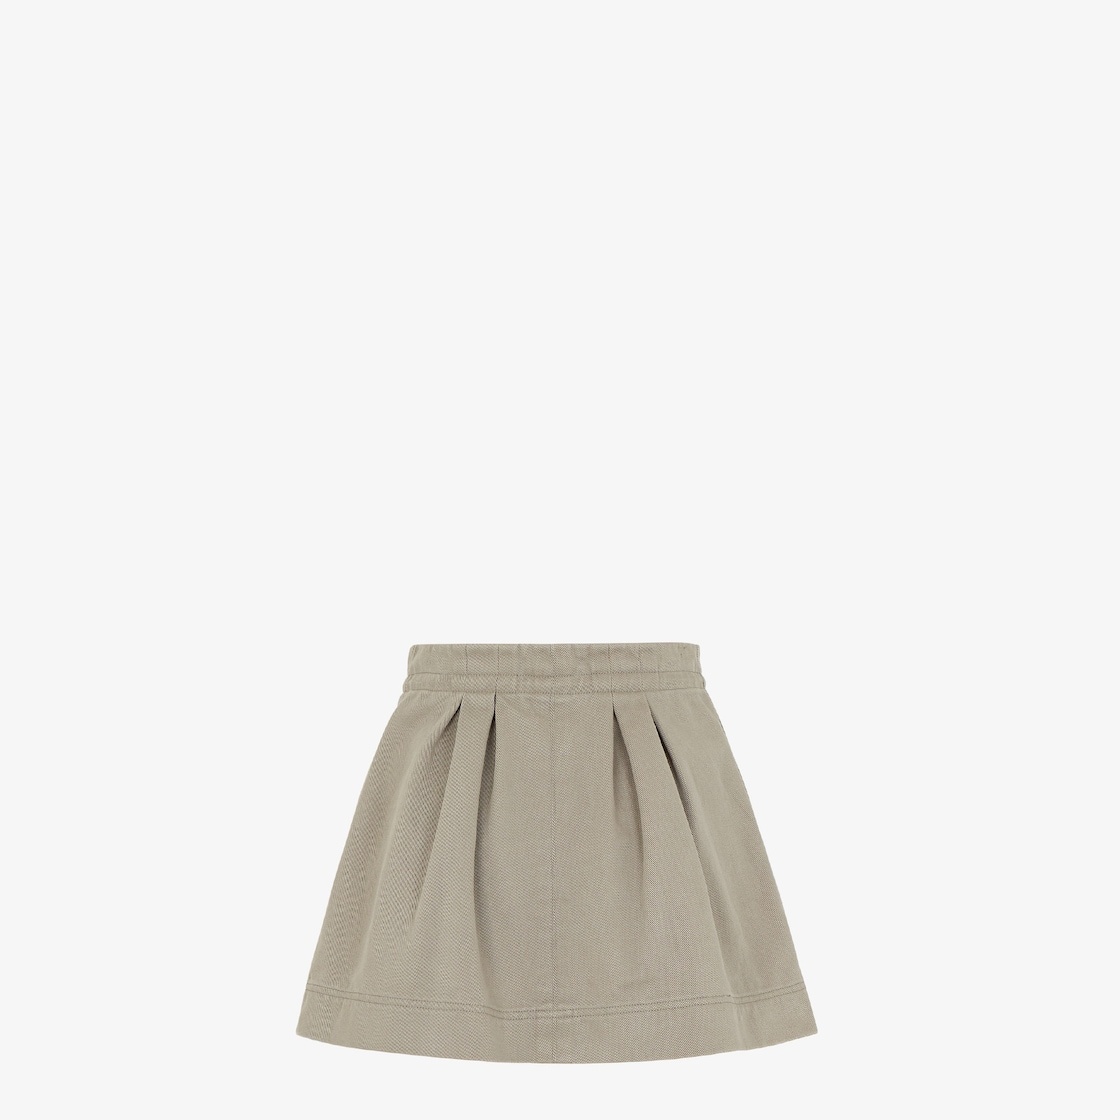 Dove gray drill skirt - 2